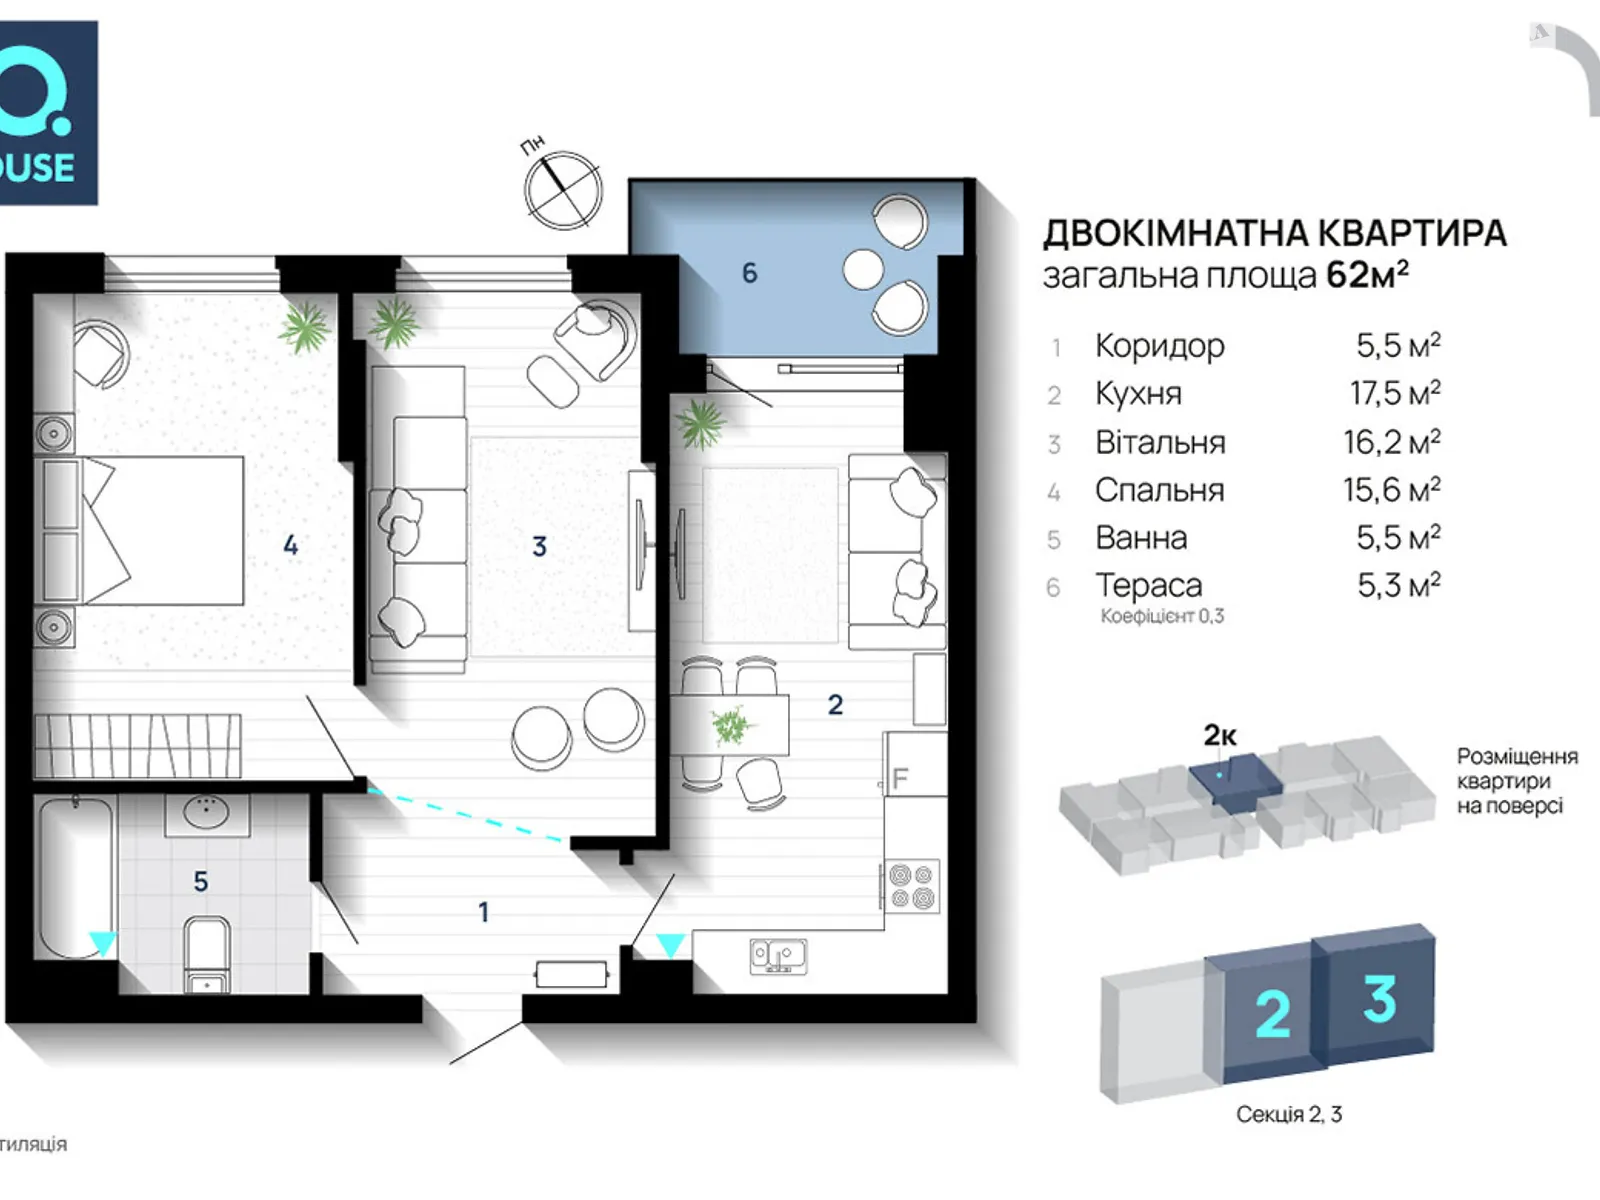 Продается 2-комнатная квартира 62 кв. м в Ивано-Франковске - фото 3